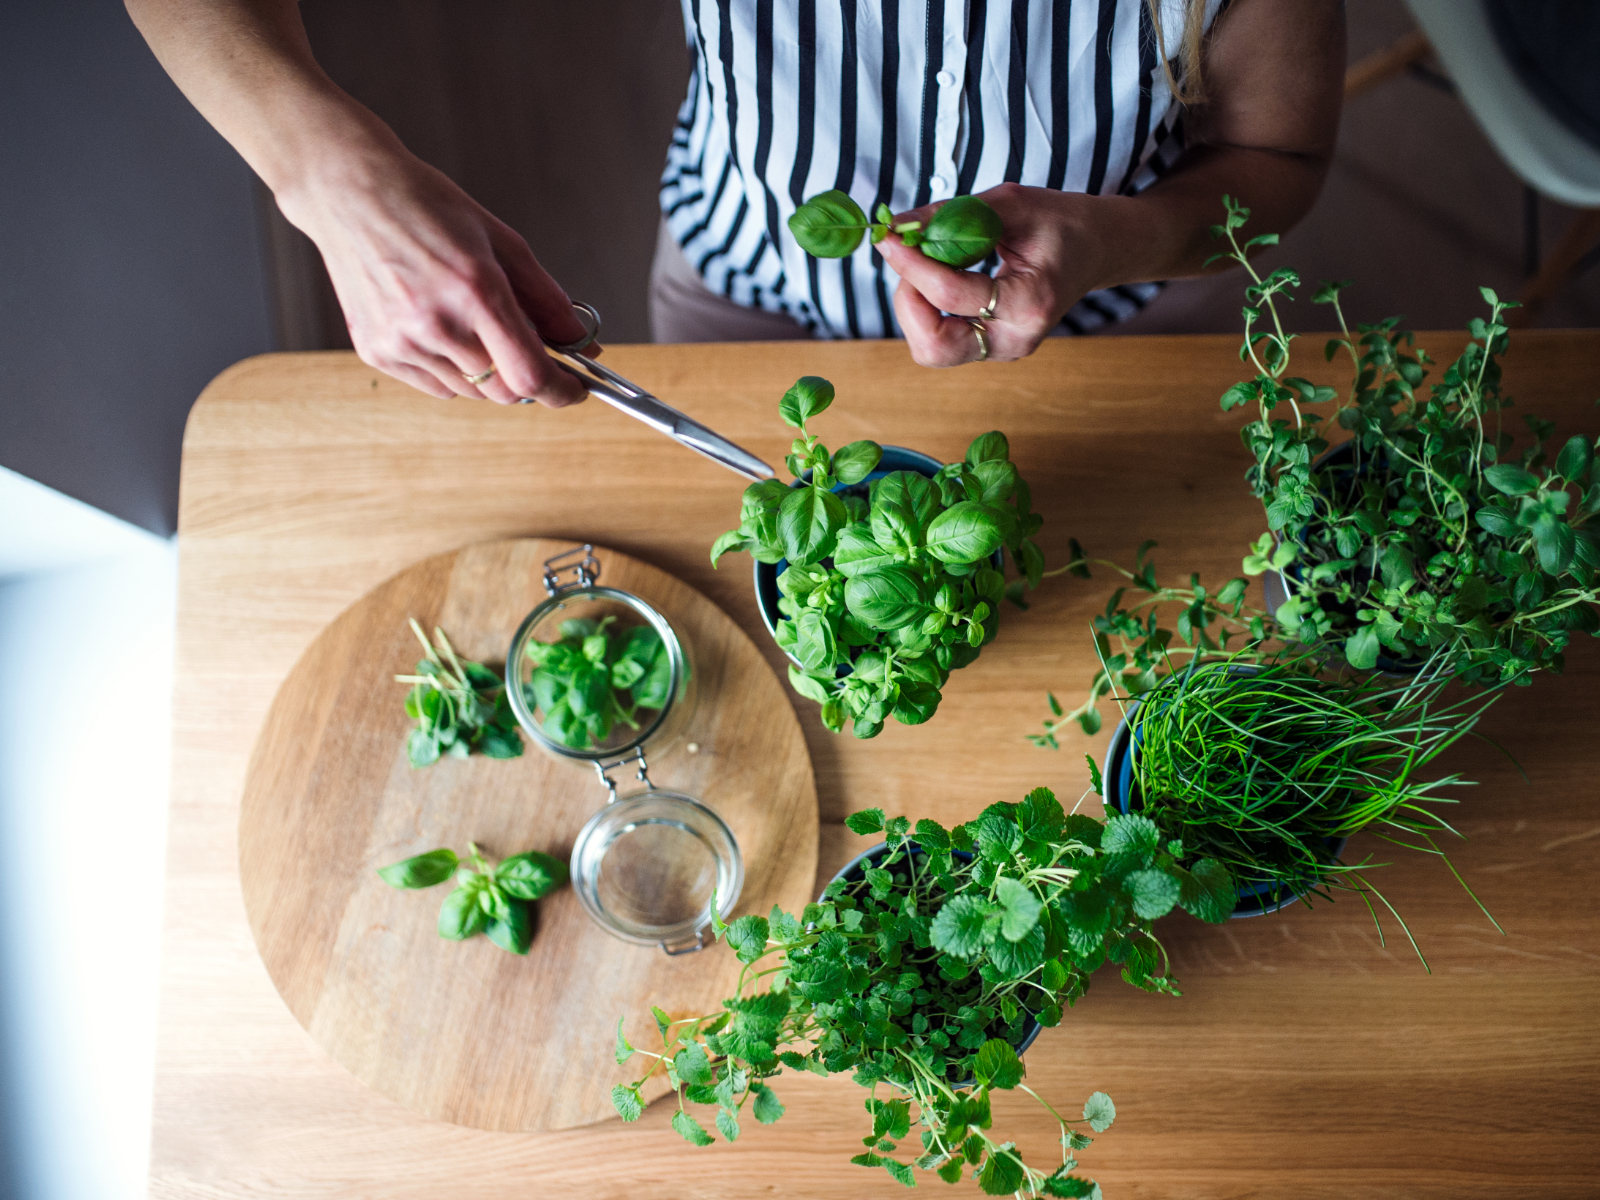 cook cutting fresh herbs in an apron